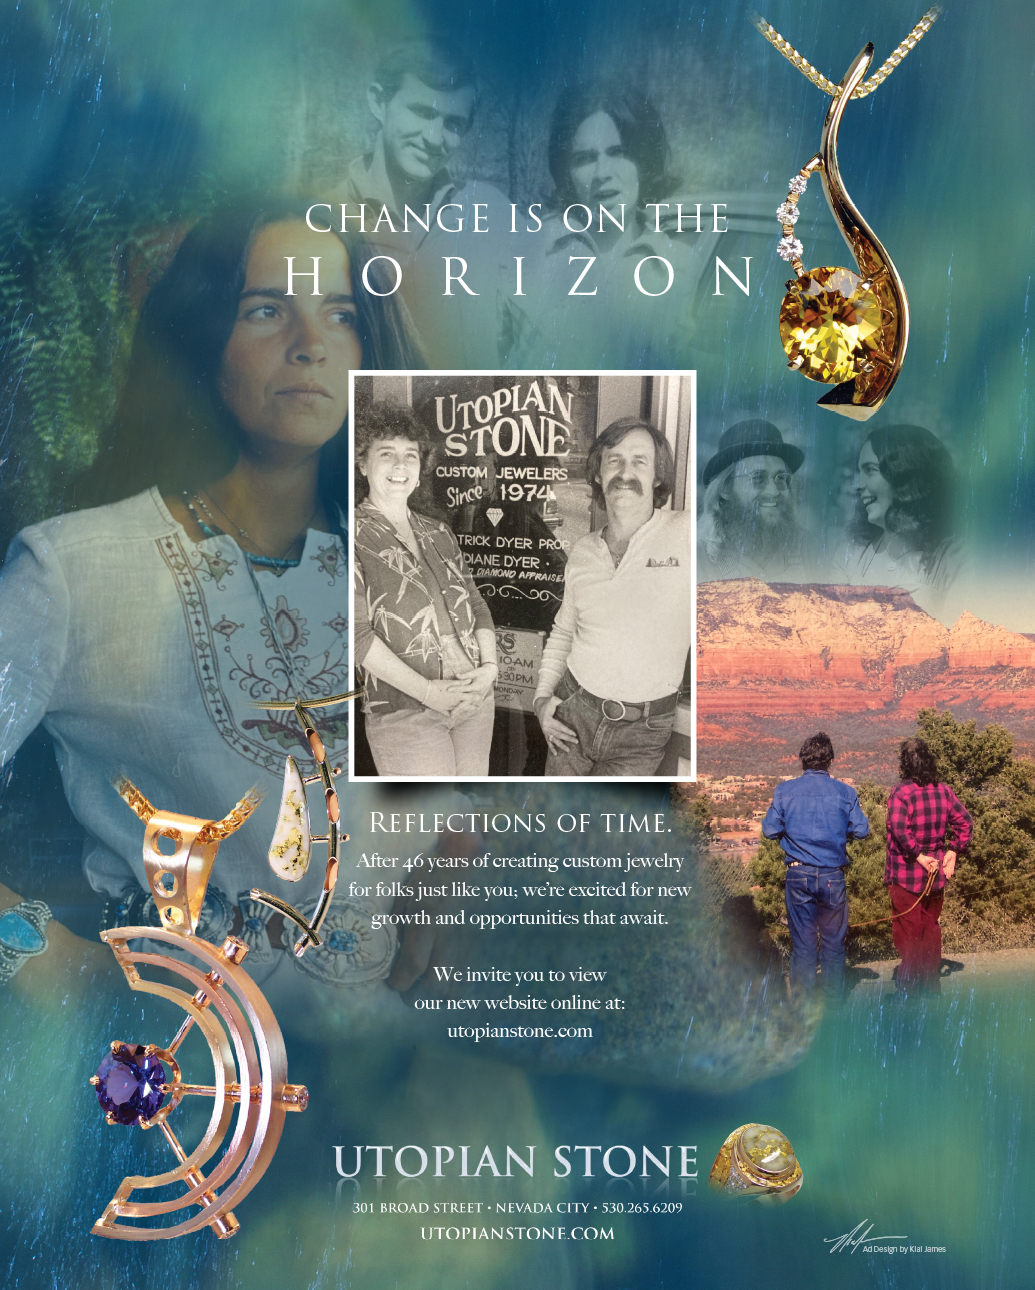 Utopian Stone Jewelry - Change is on the Horizon